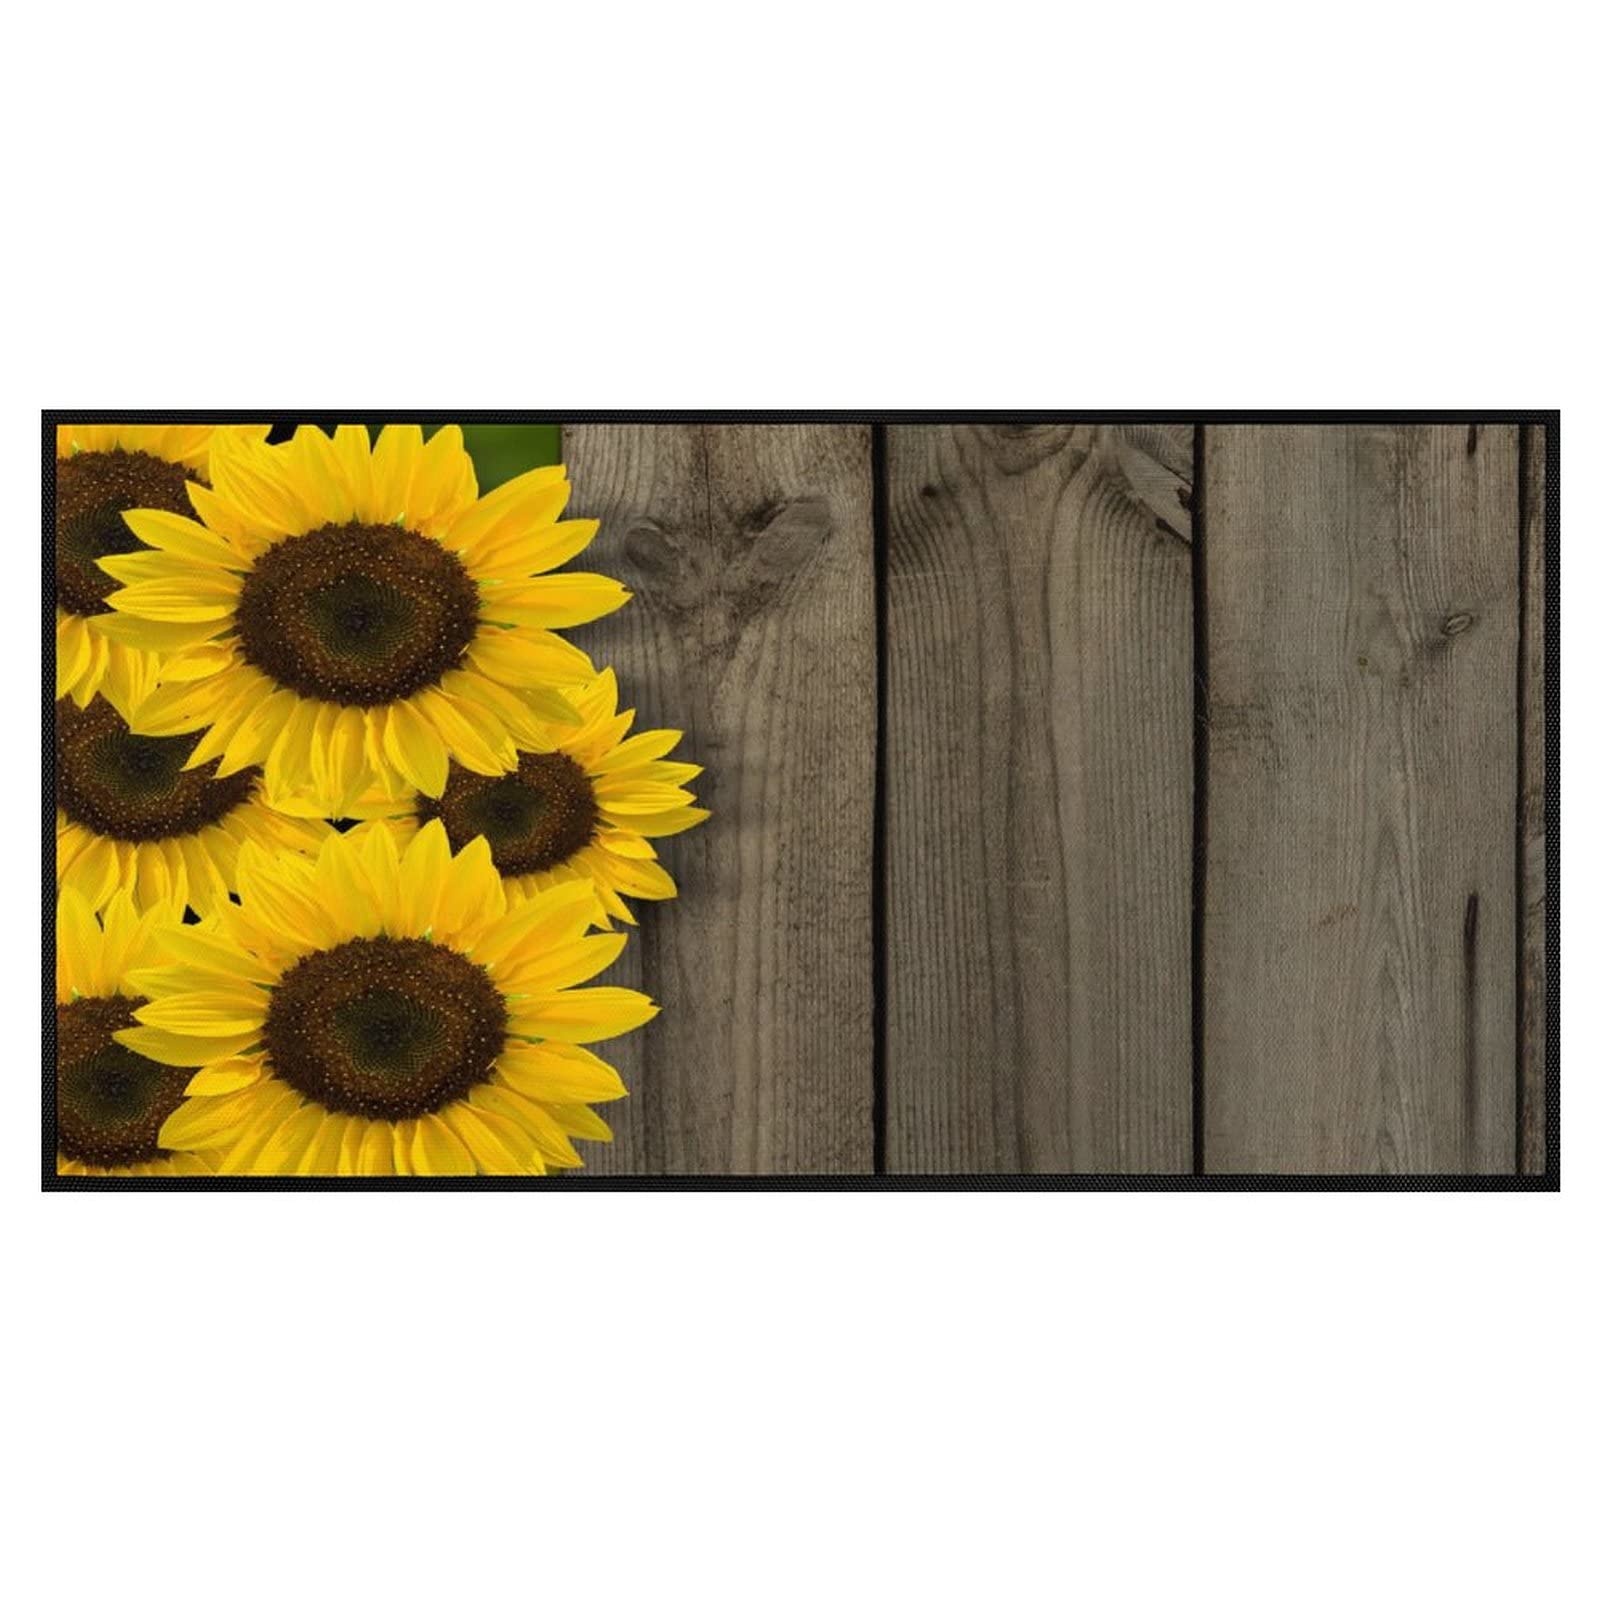 TsyTma Kitchen Rugs Sunflowers Fence Non-Slip Soft Kitchen Mats Flower on Wood Bath Rug Runner Doormats Carpet for Home Decor, 39" X 20"